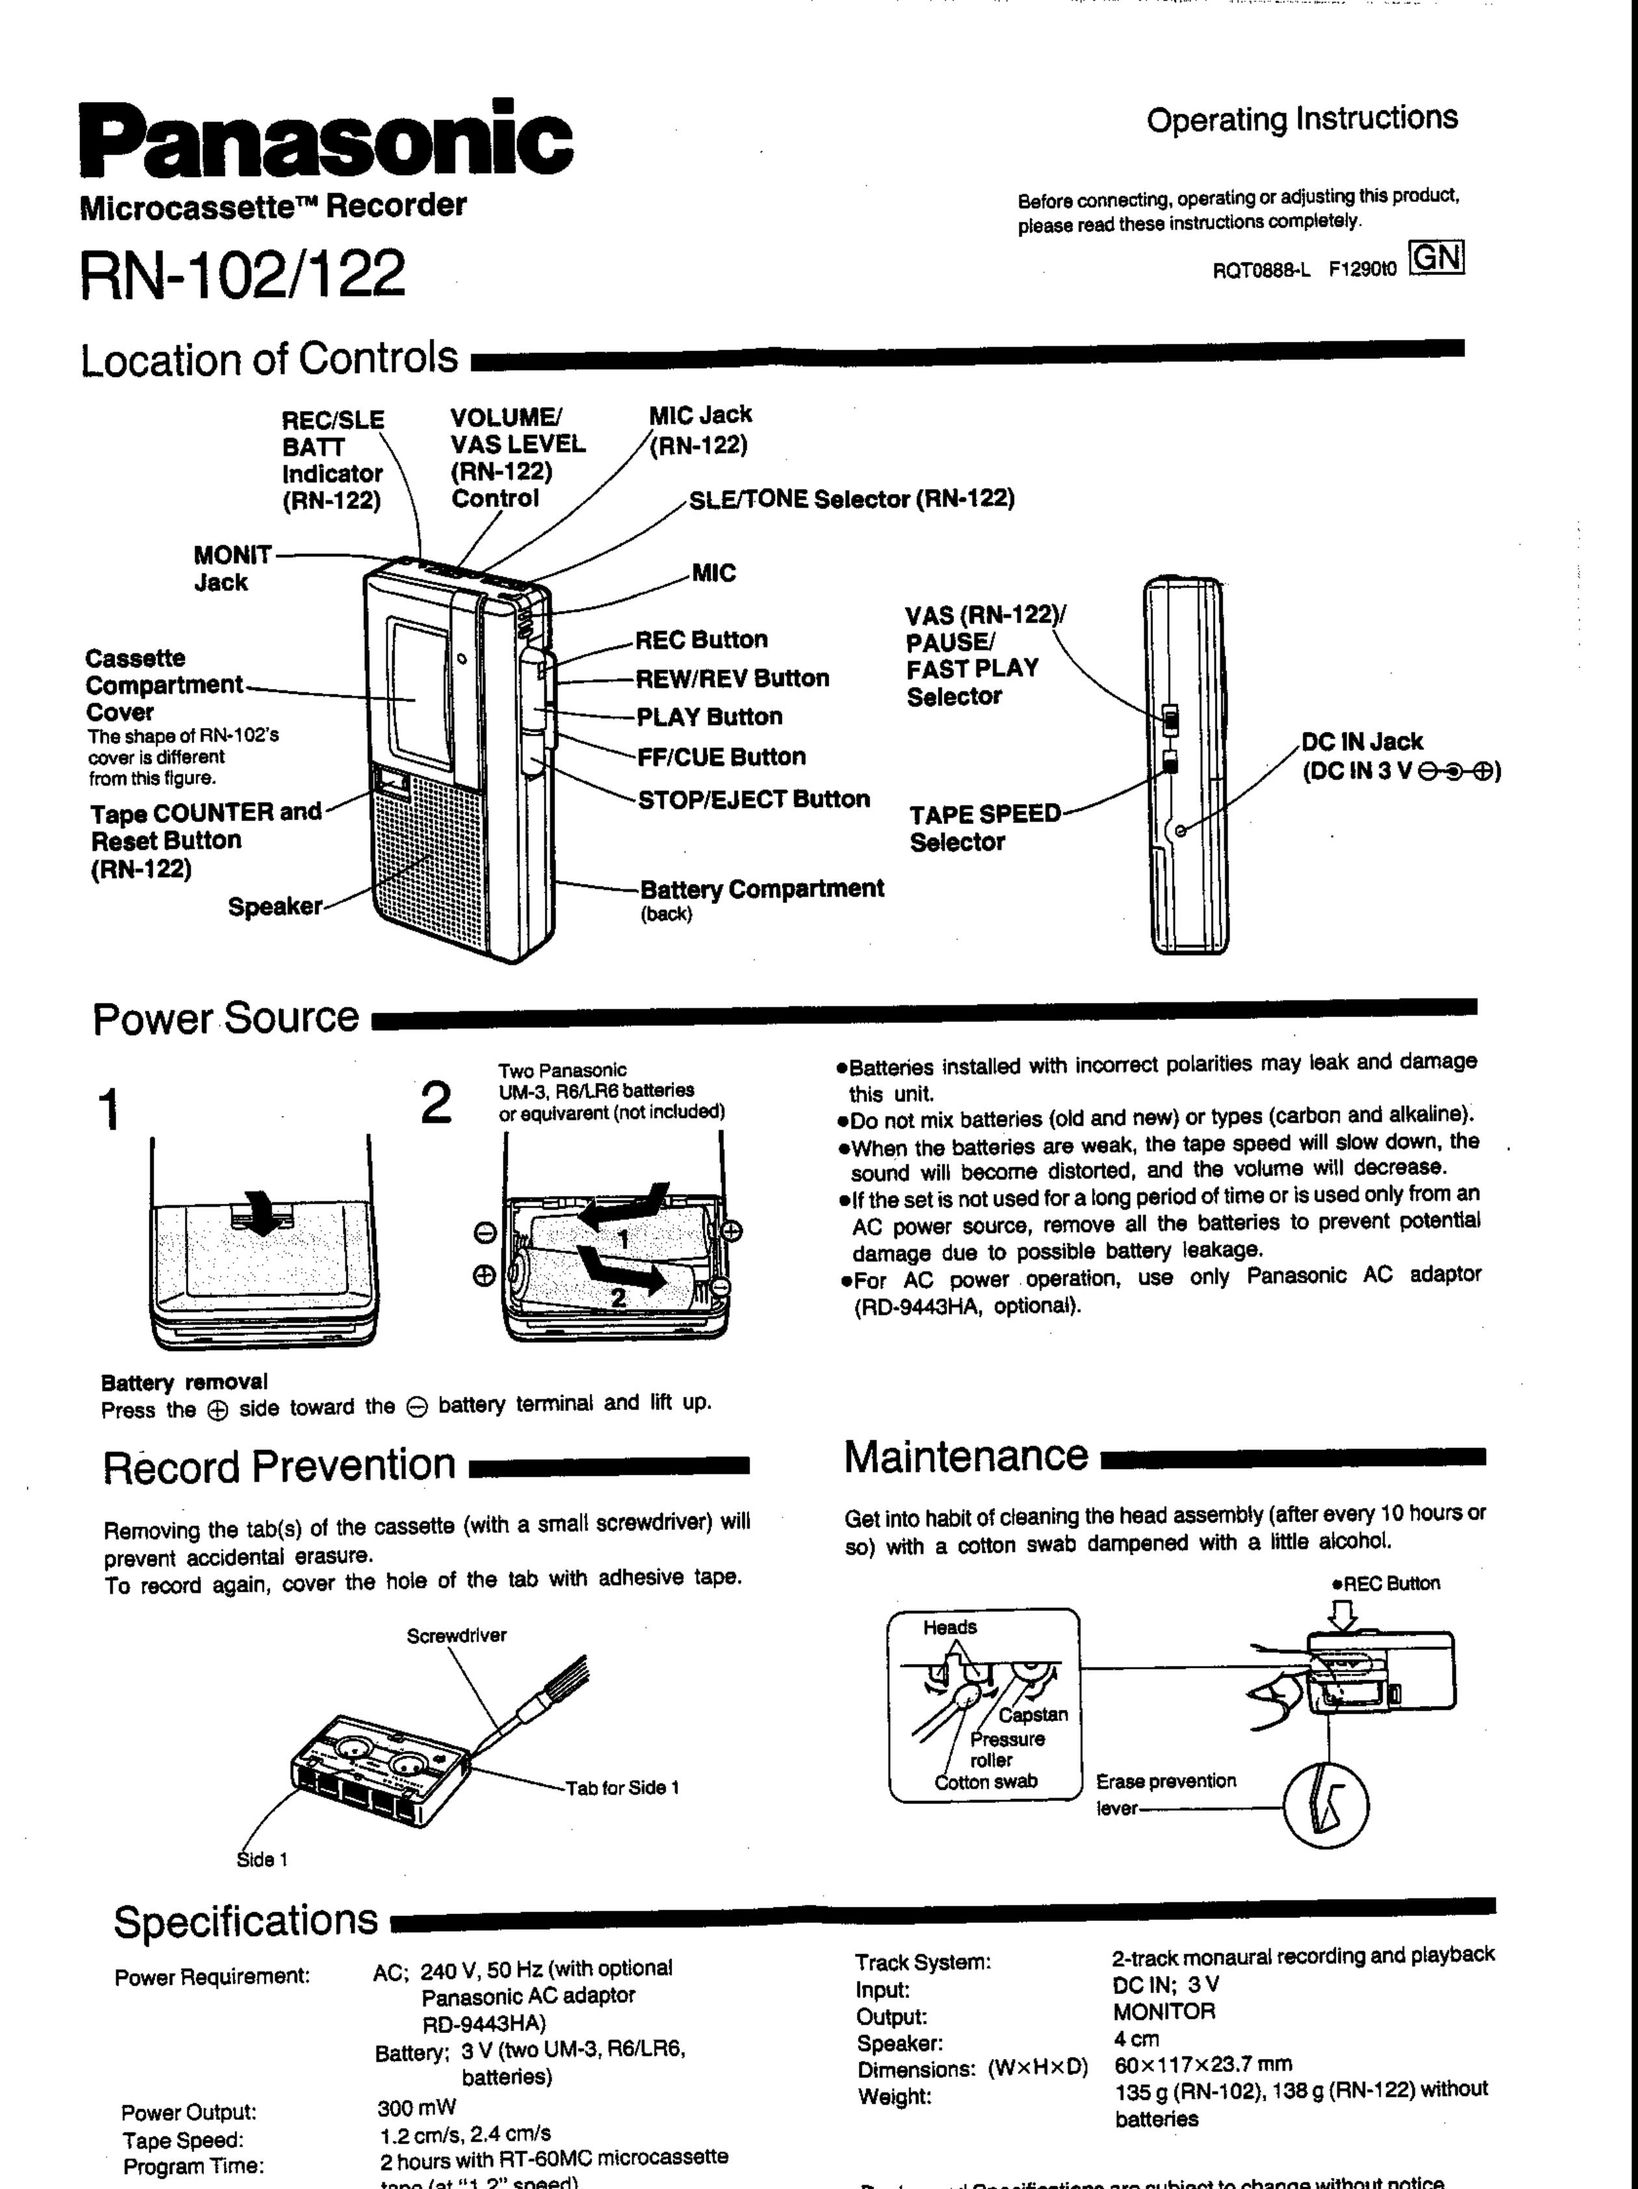 Panasonic RN-122 Microcassette Recorder User Manual